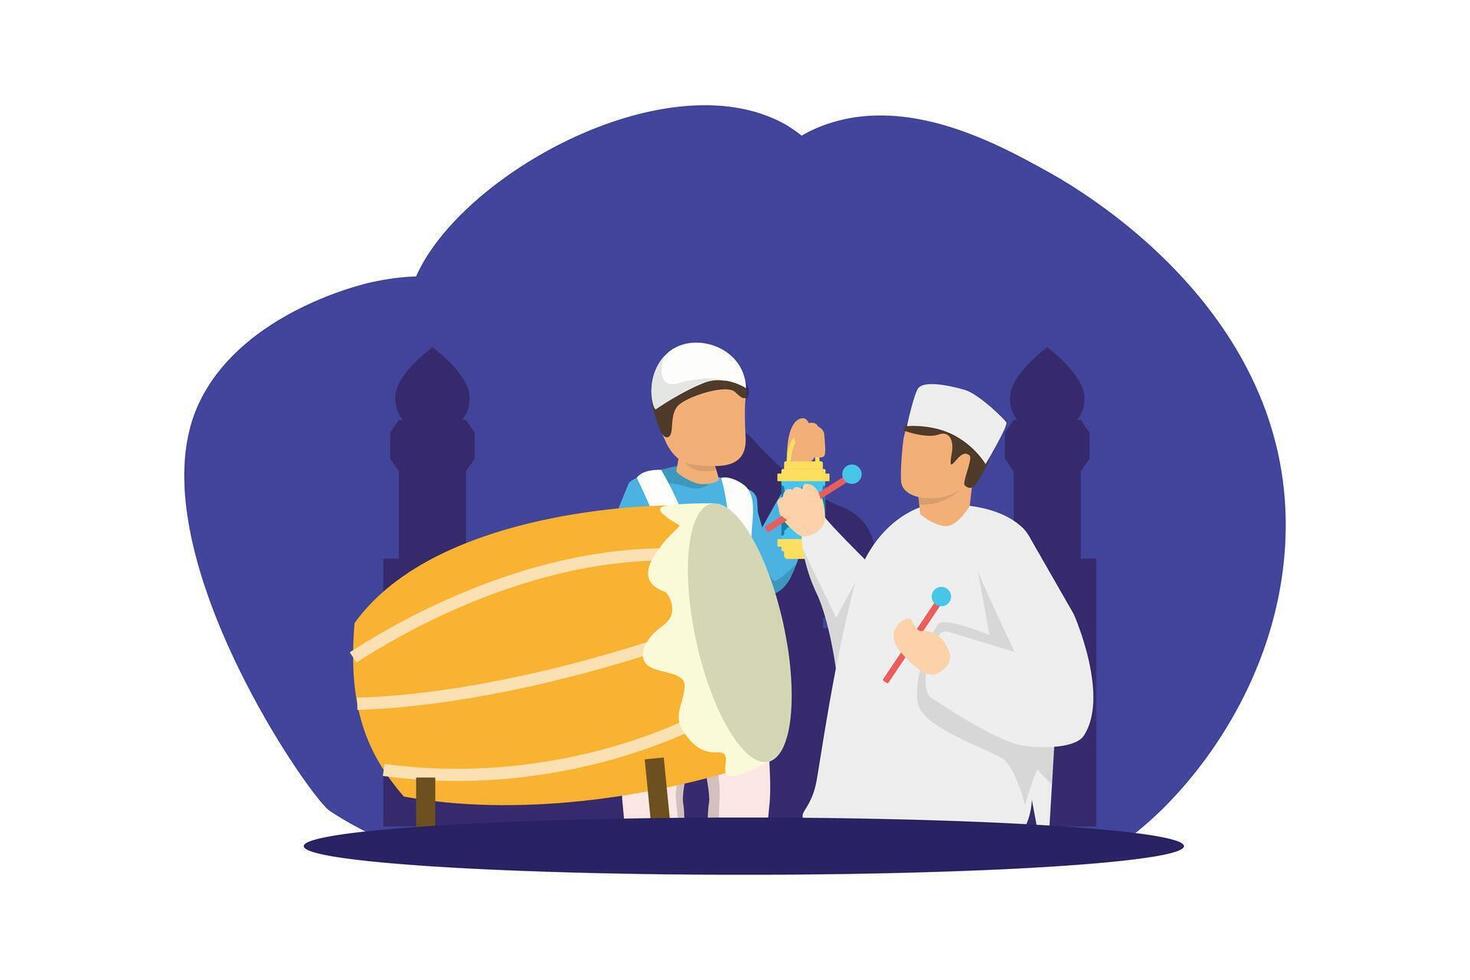 Ramadan kareem eben Design Illustration vektor